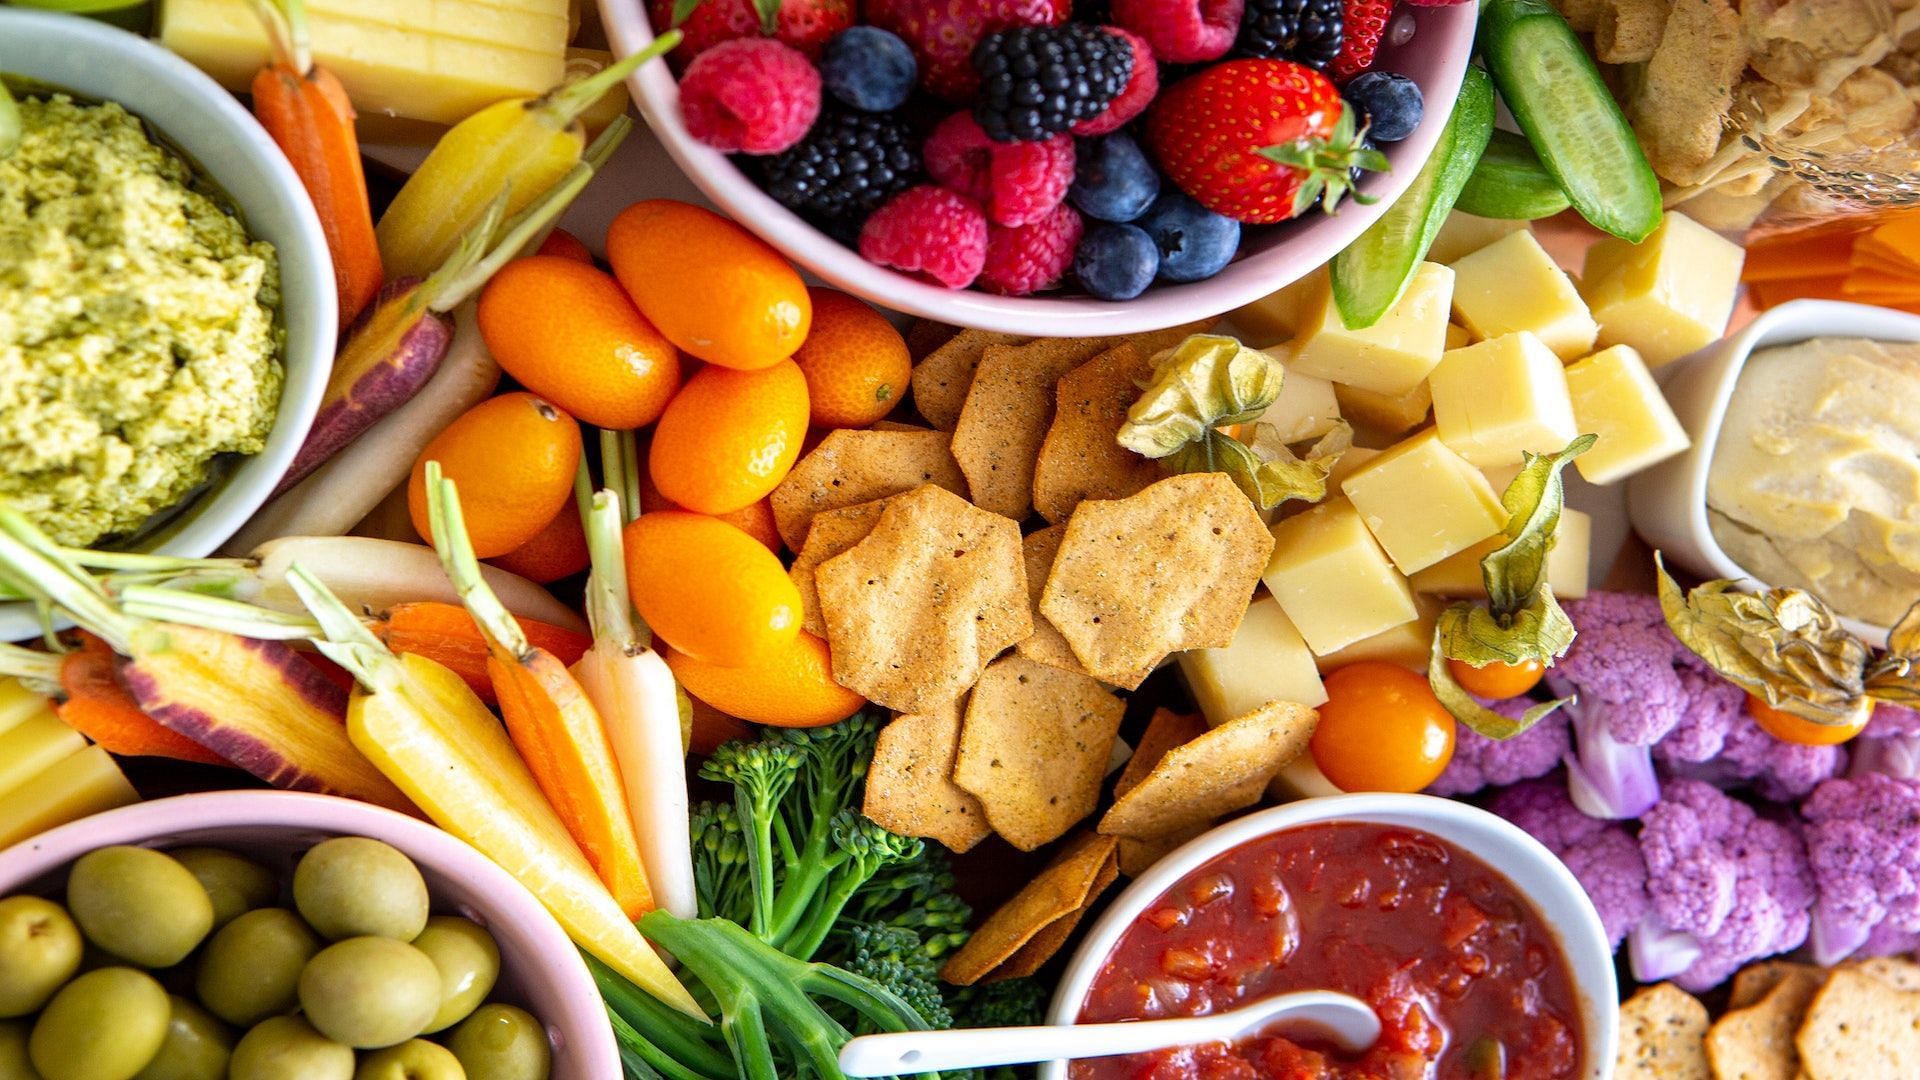 Healthy snack options are easy to make at home. Image via Unsplash/Marcin Skalij